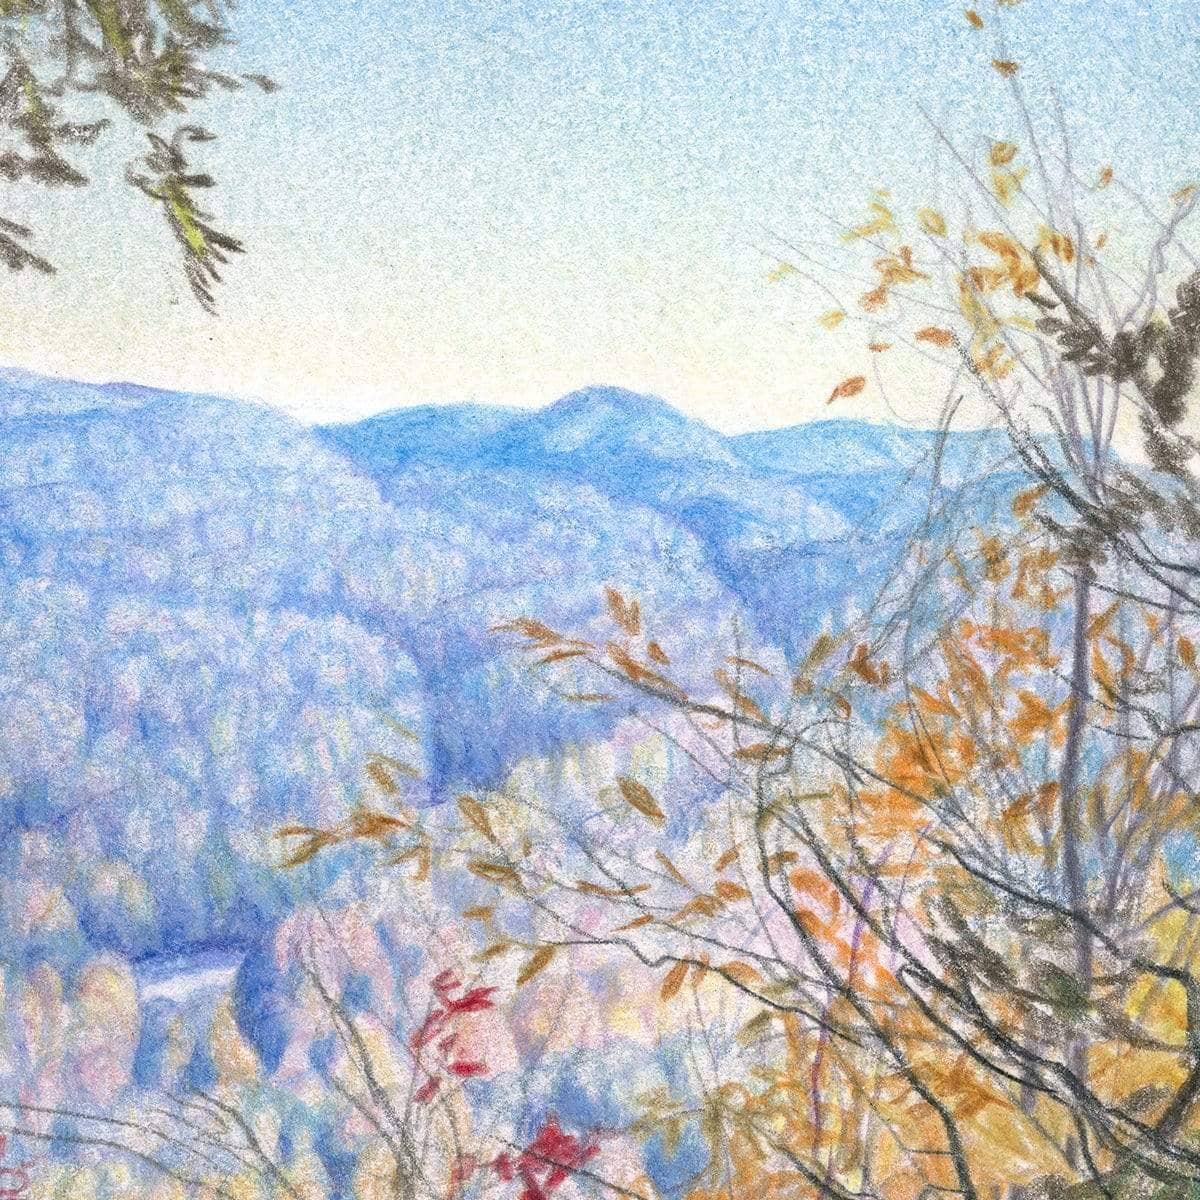 Hockley Valley Rock - Art Print | Artwork by Glen Loates